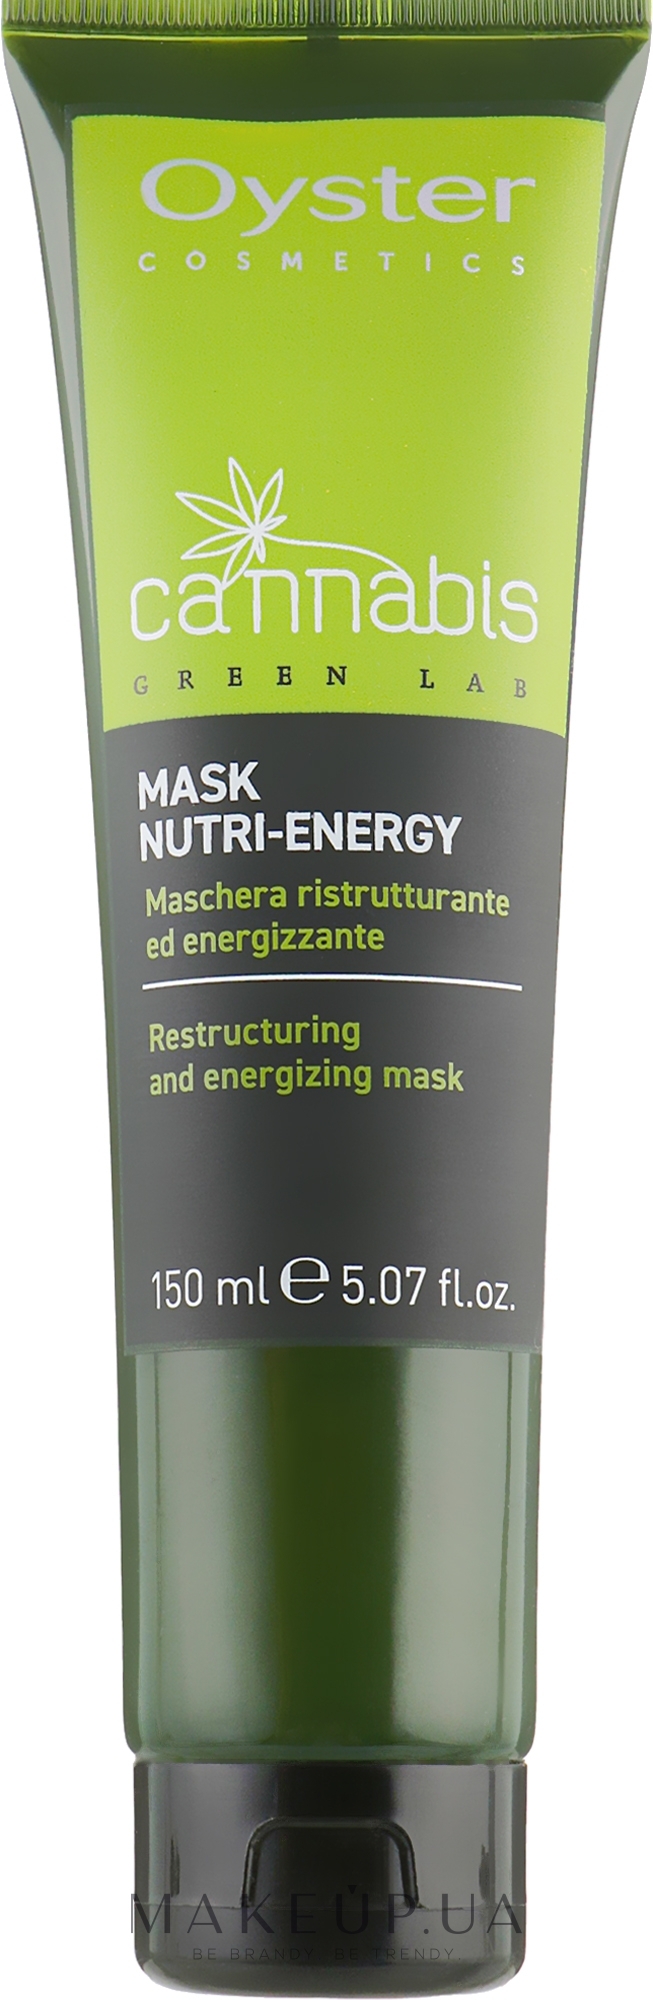 Відновлювальна маска для волосся - Oyster Cosmetics Cannabis Green Lab Mask Nutri-Energy — фото 150ml